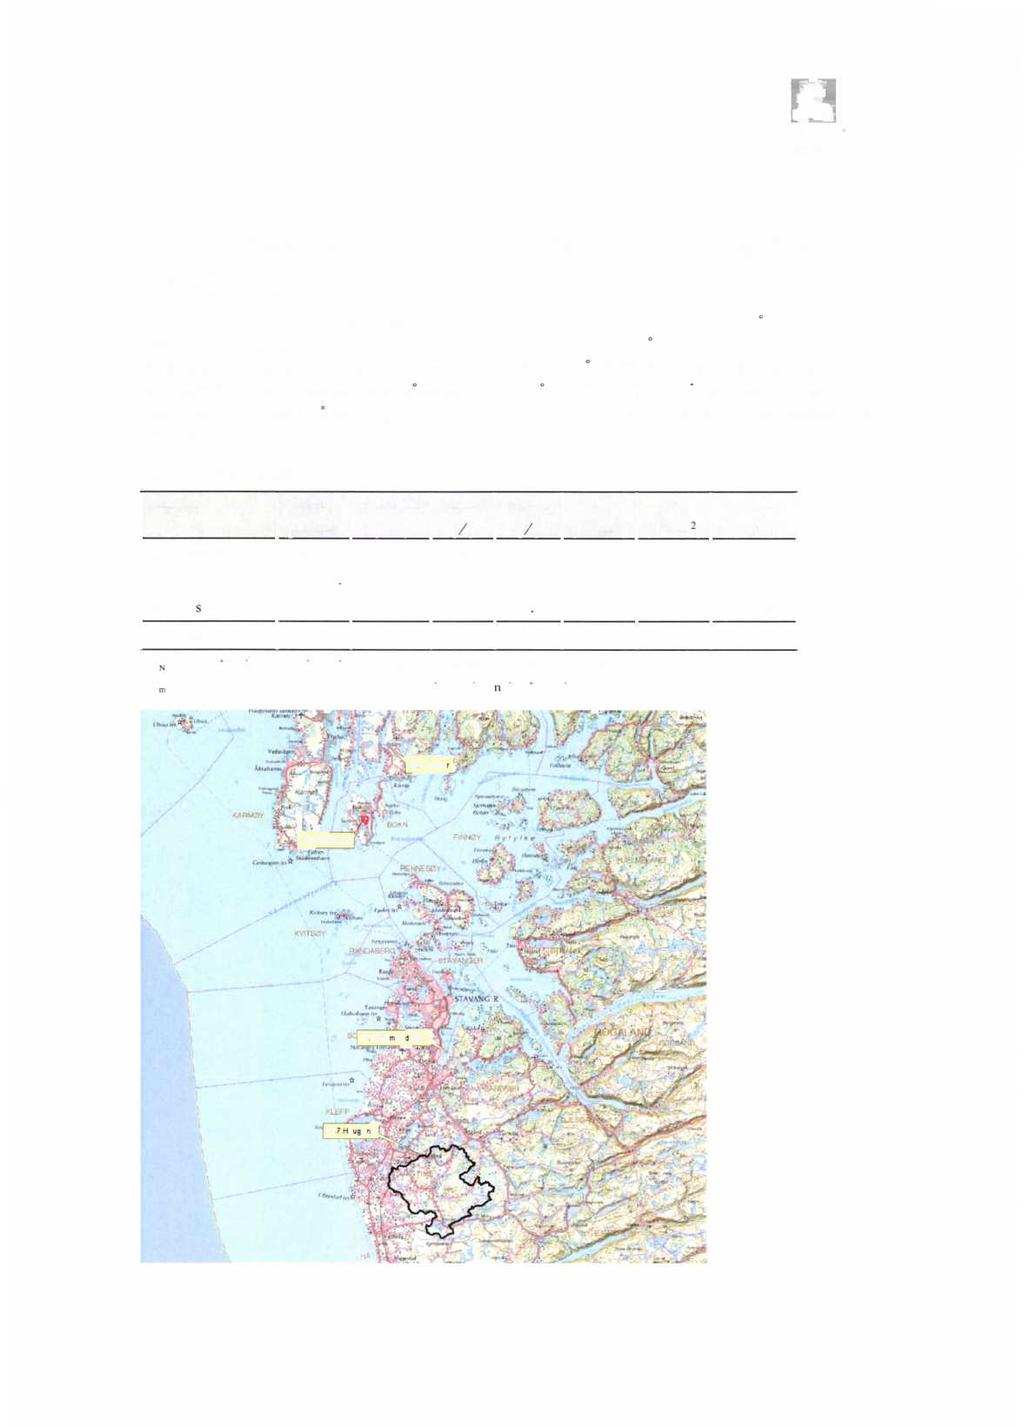 da: NVE Side 6 Figur 1. Nedbørfeltet til Torlandsvatnet.